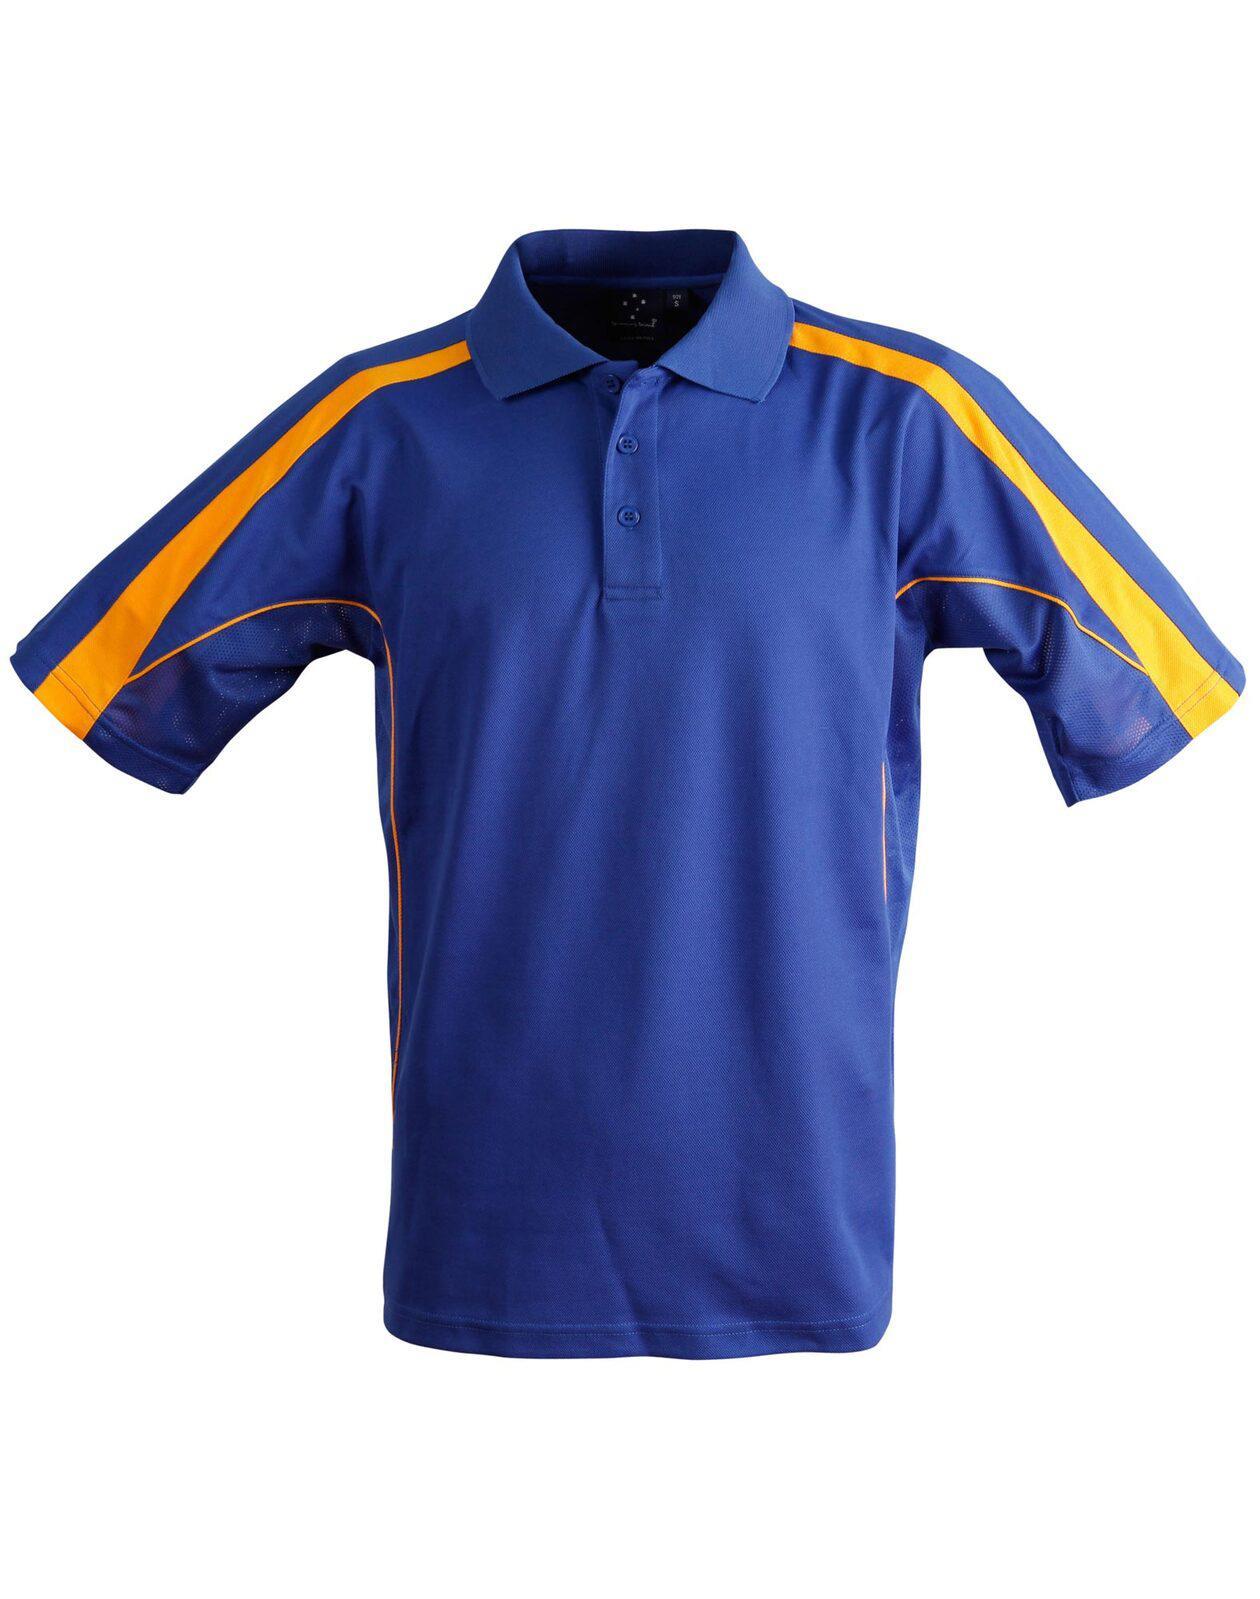 PS53 Sz XS LEGEND Polyester Cotton Men's Polo Shirt Royal Blue/Gold